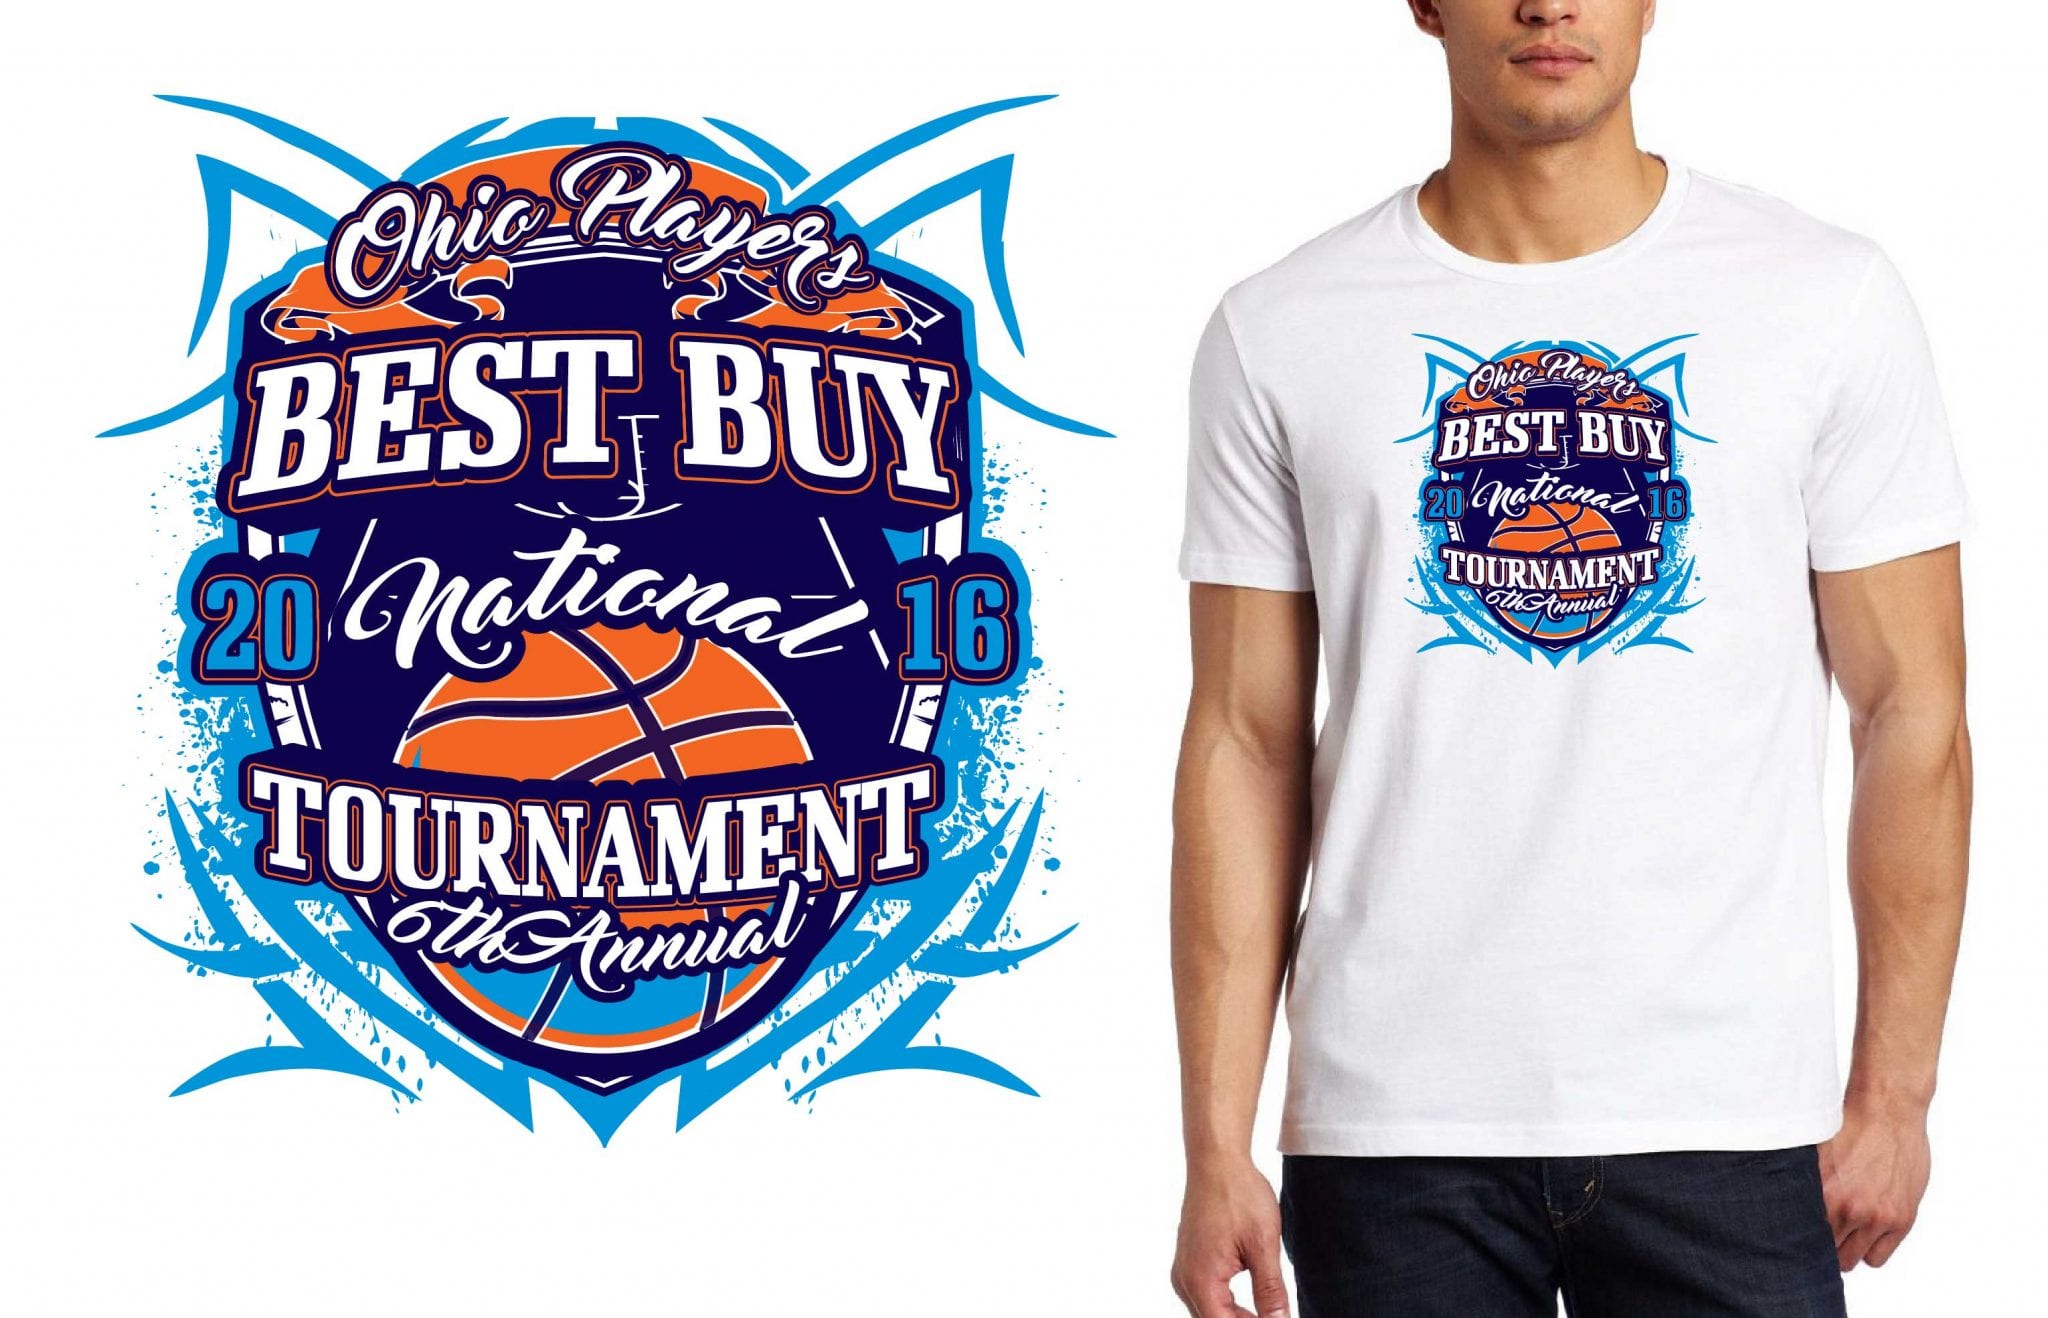 2016 Best Buy National Tournament, vector artwork, logo for tshirt, basketball logo design by UrArtStudio.com